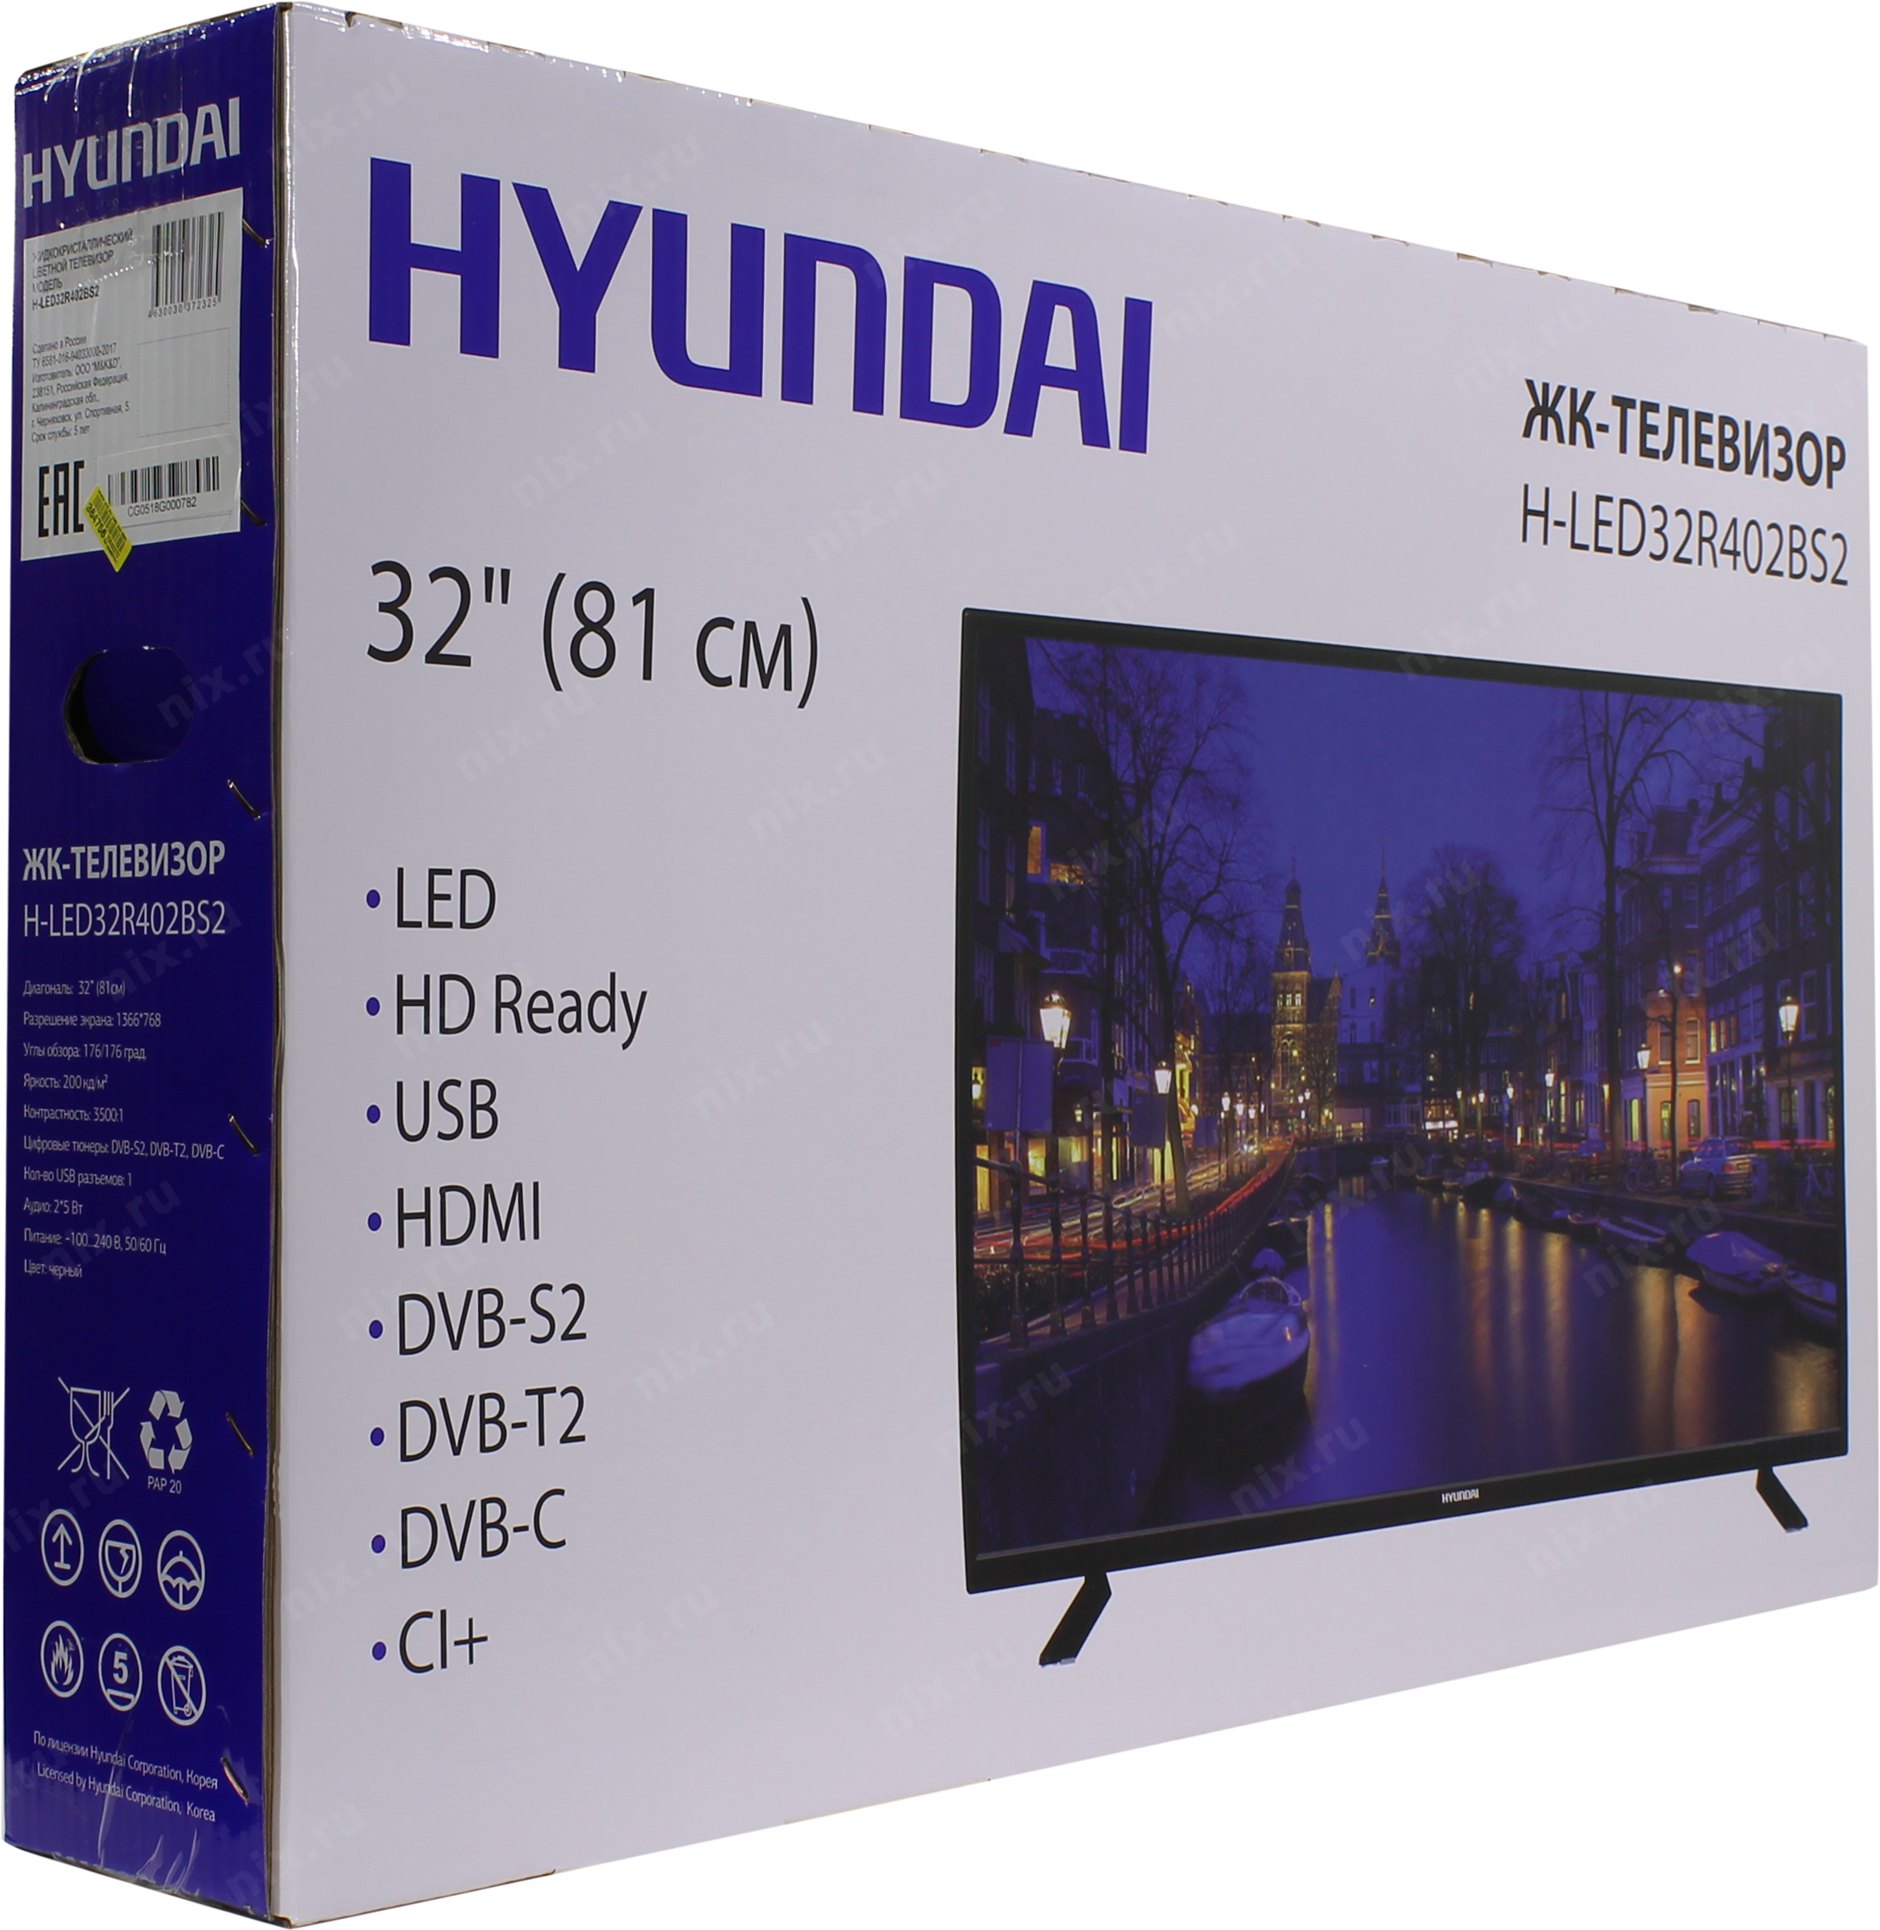 Led32bs5002 телевизор hyundai. Телевизор Hyundai h-led32r402bs2. H-led32r402bs2 подсветка. Материнская плата на ТВ Hyundai h led32r402bs2. Телевизор Hyundai 32.